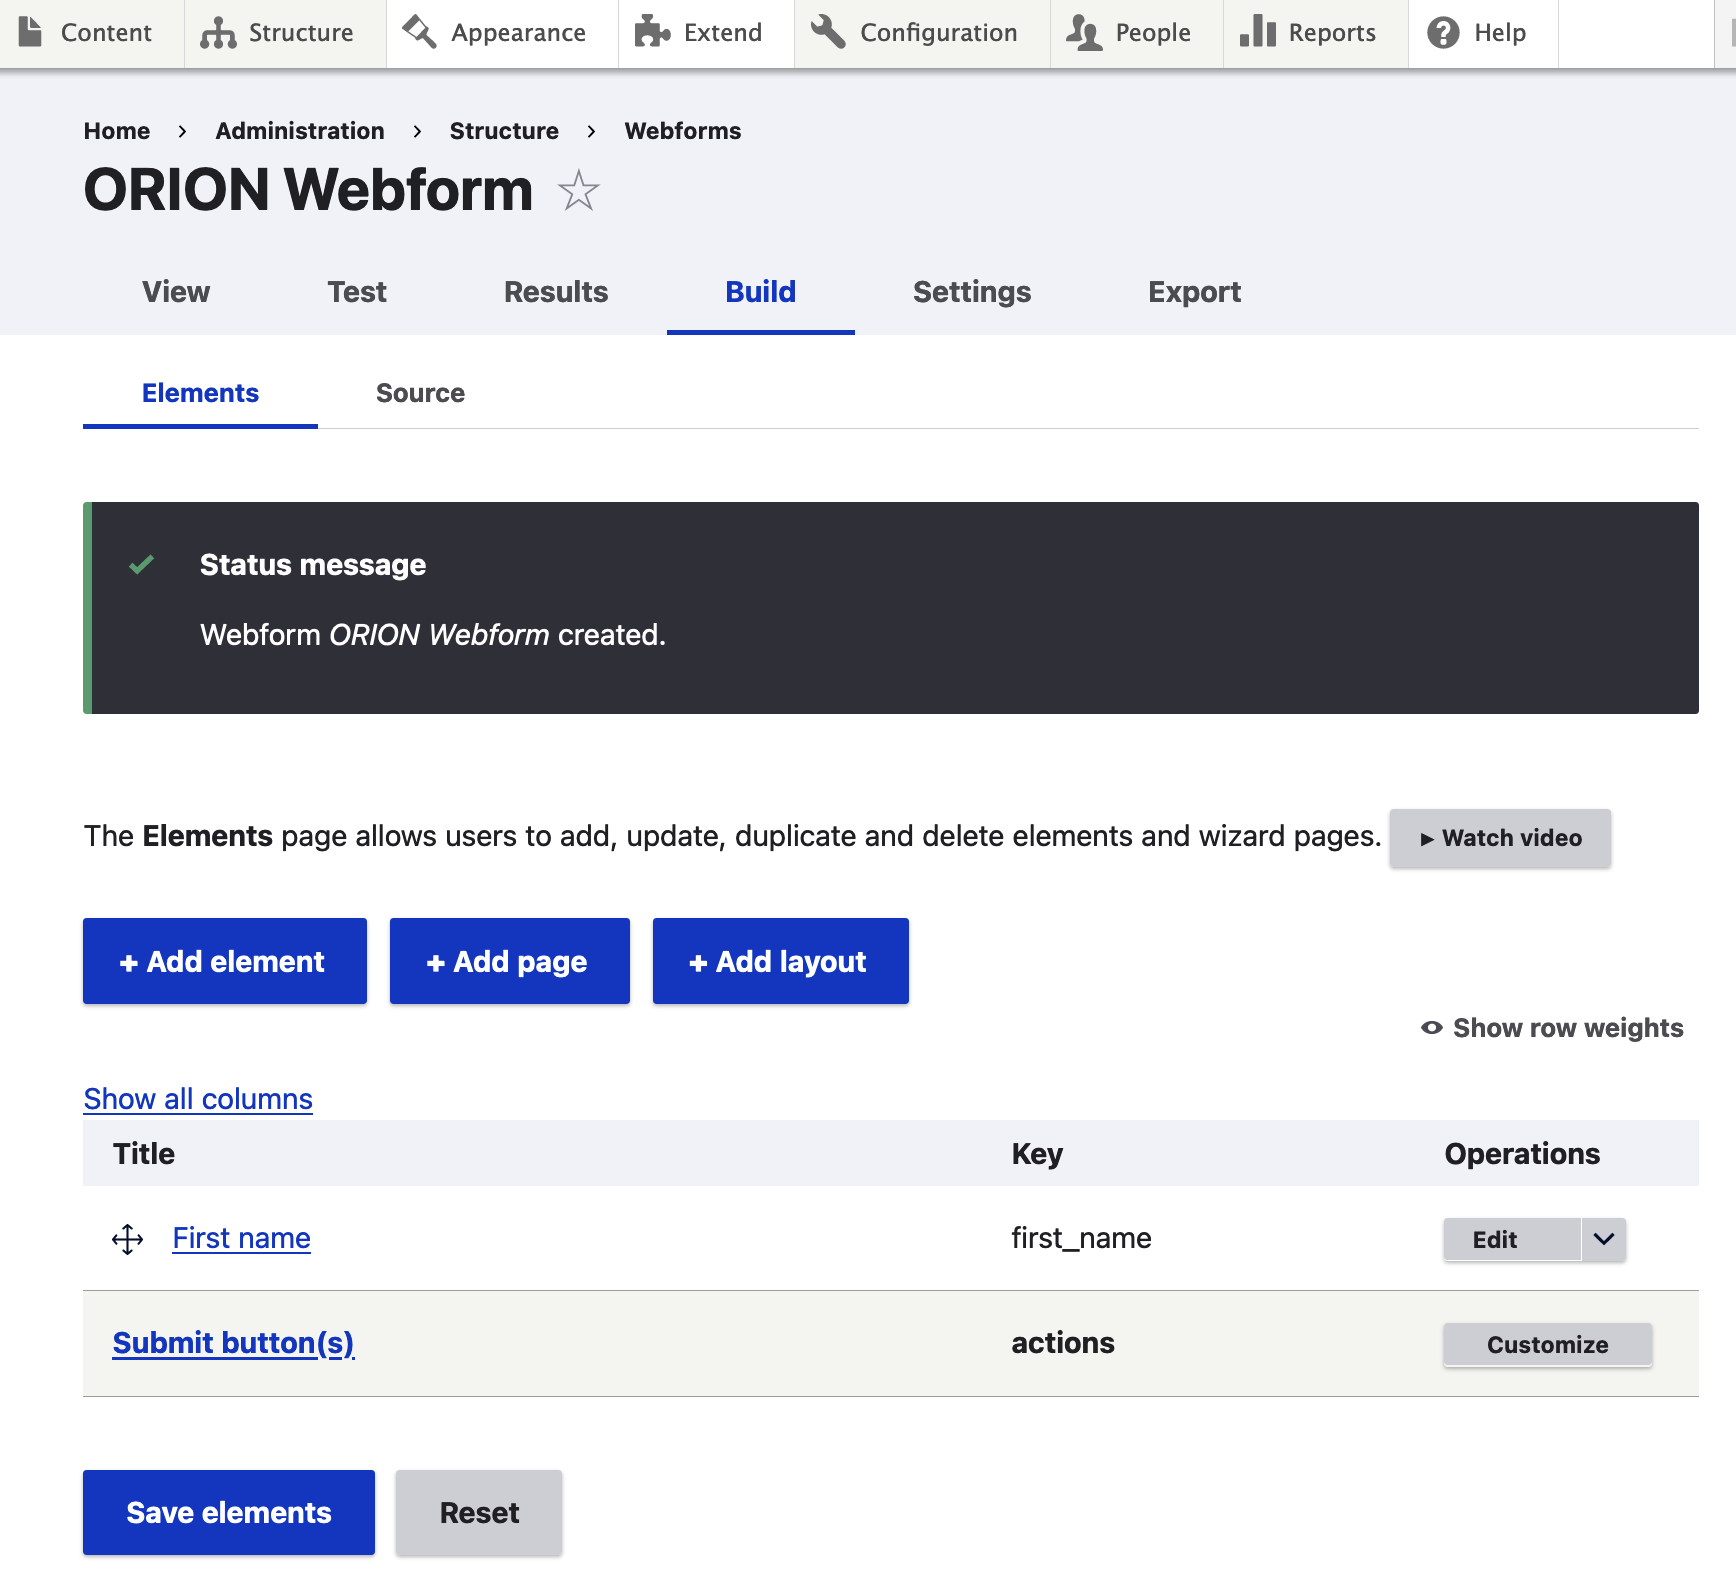 ORION webform - Build screen